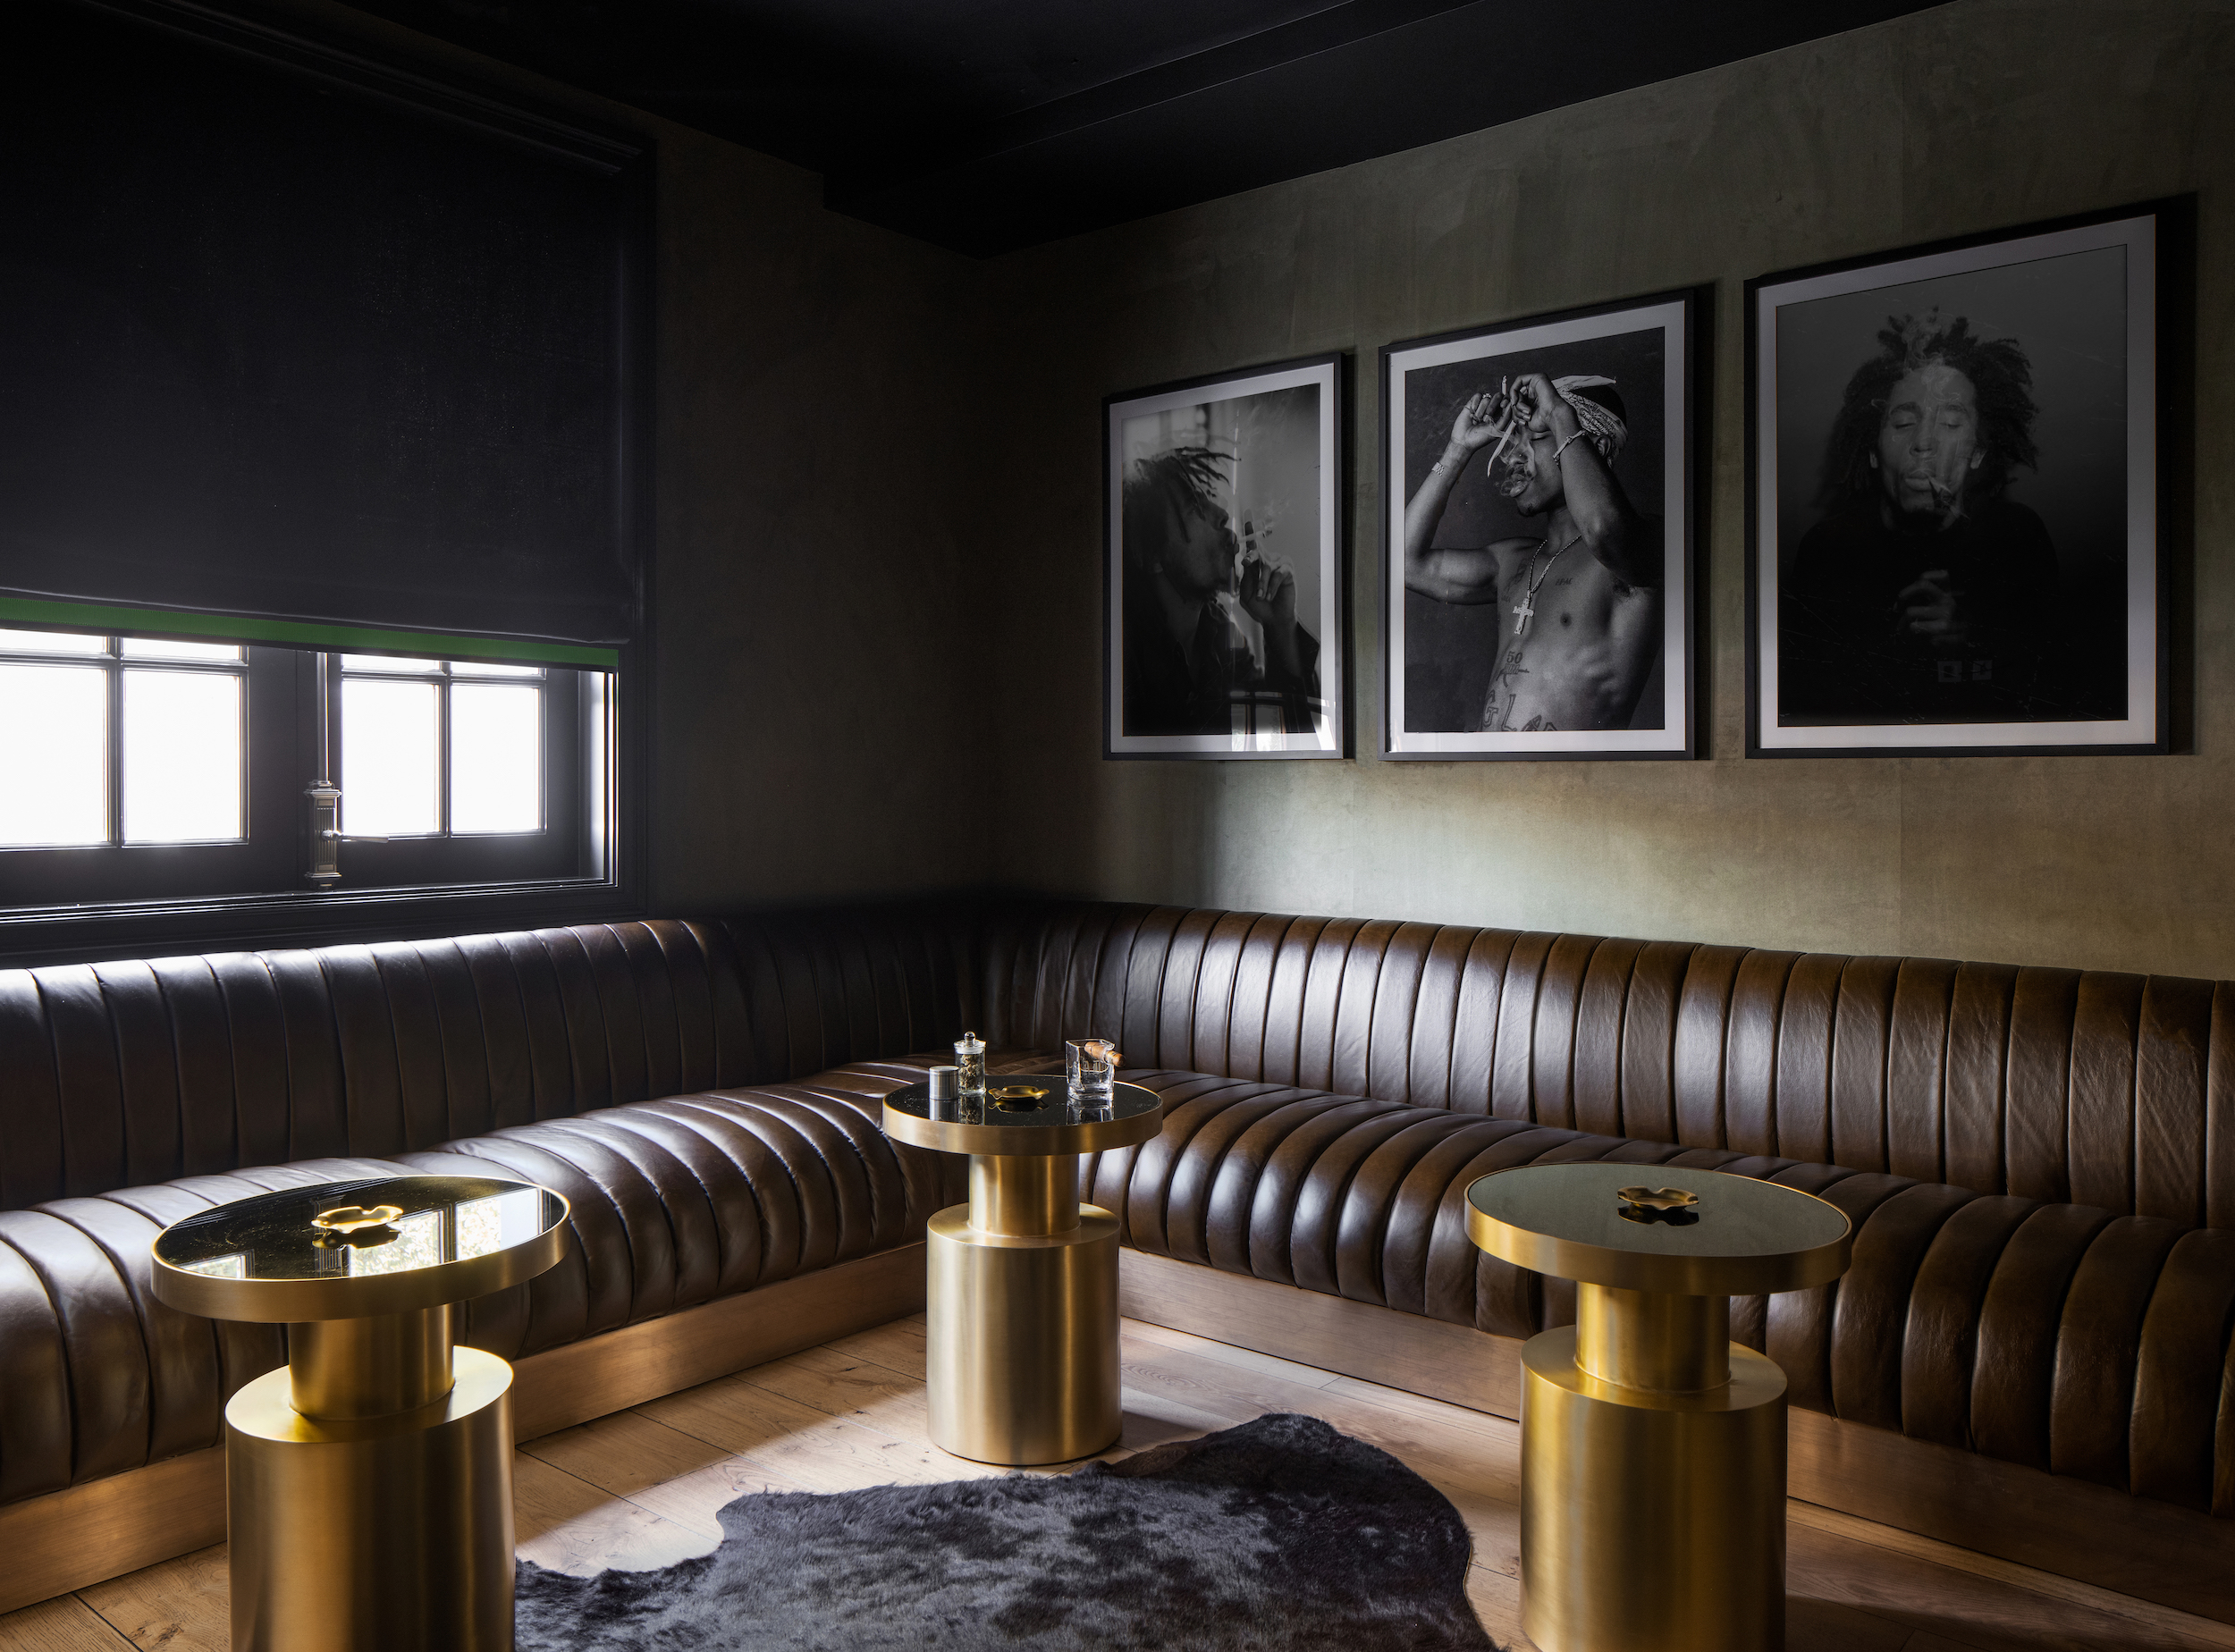 A "weed lounge" designed by interior designer Ryan Saghian